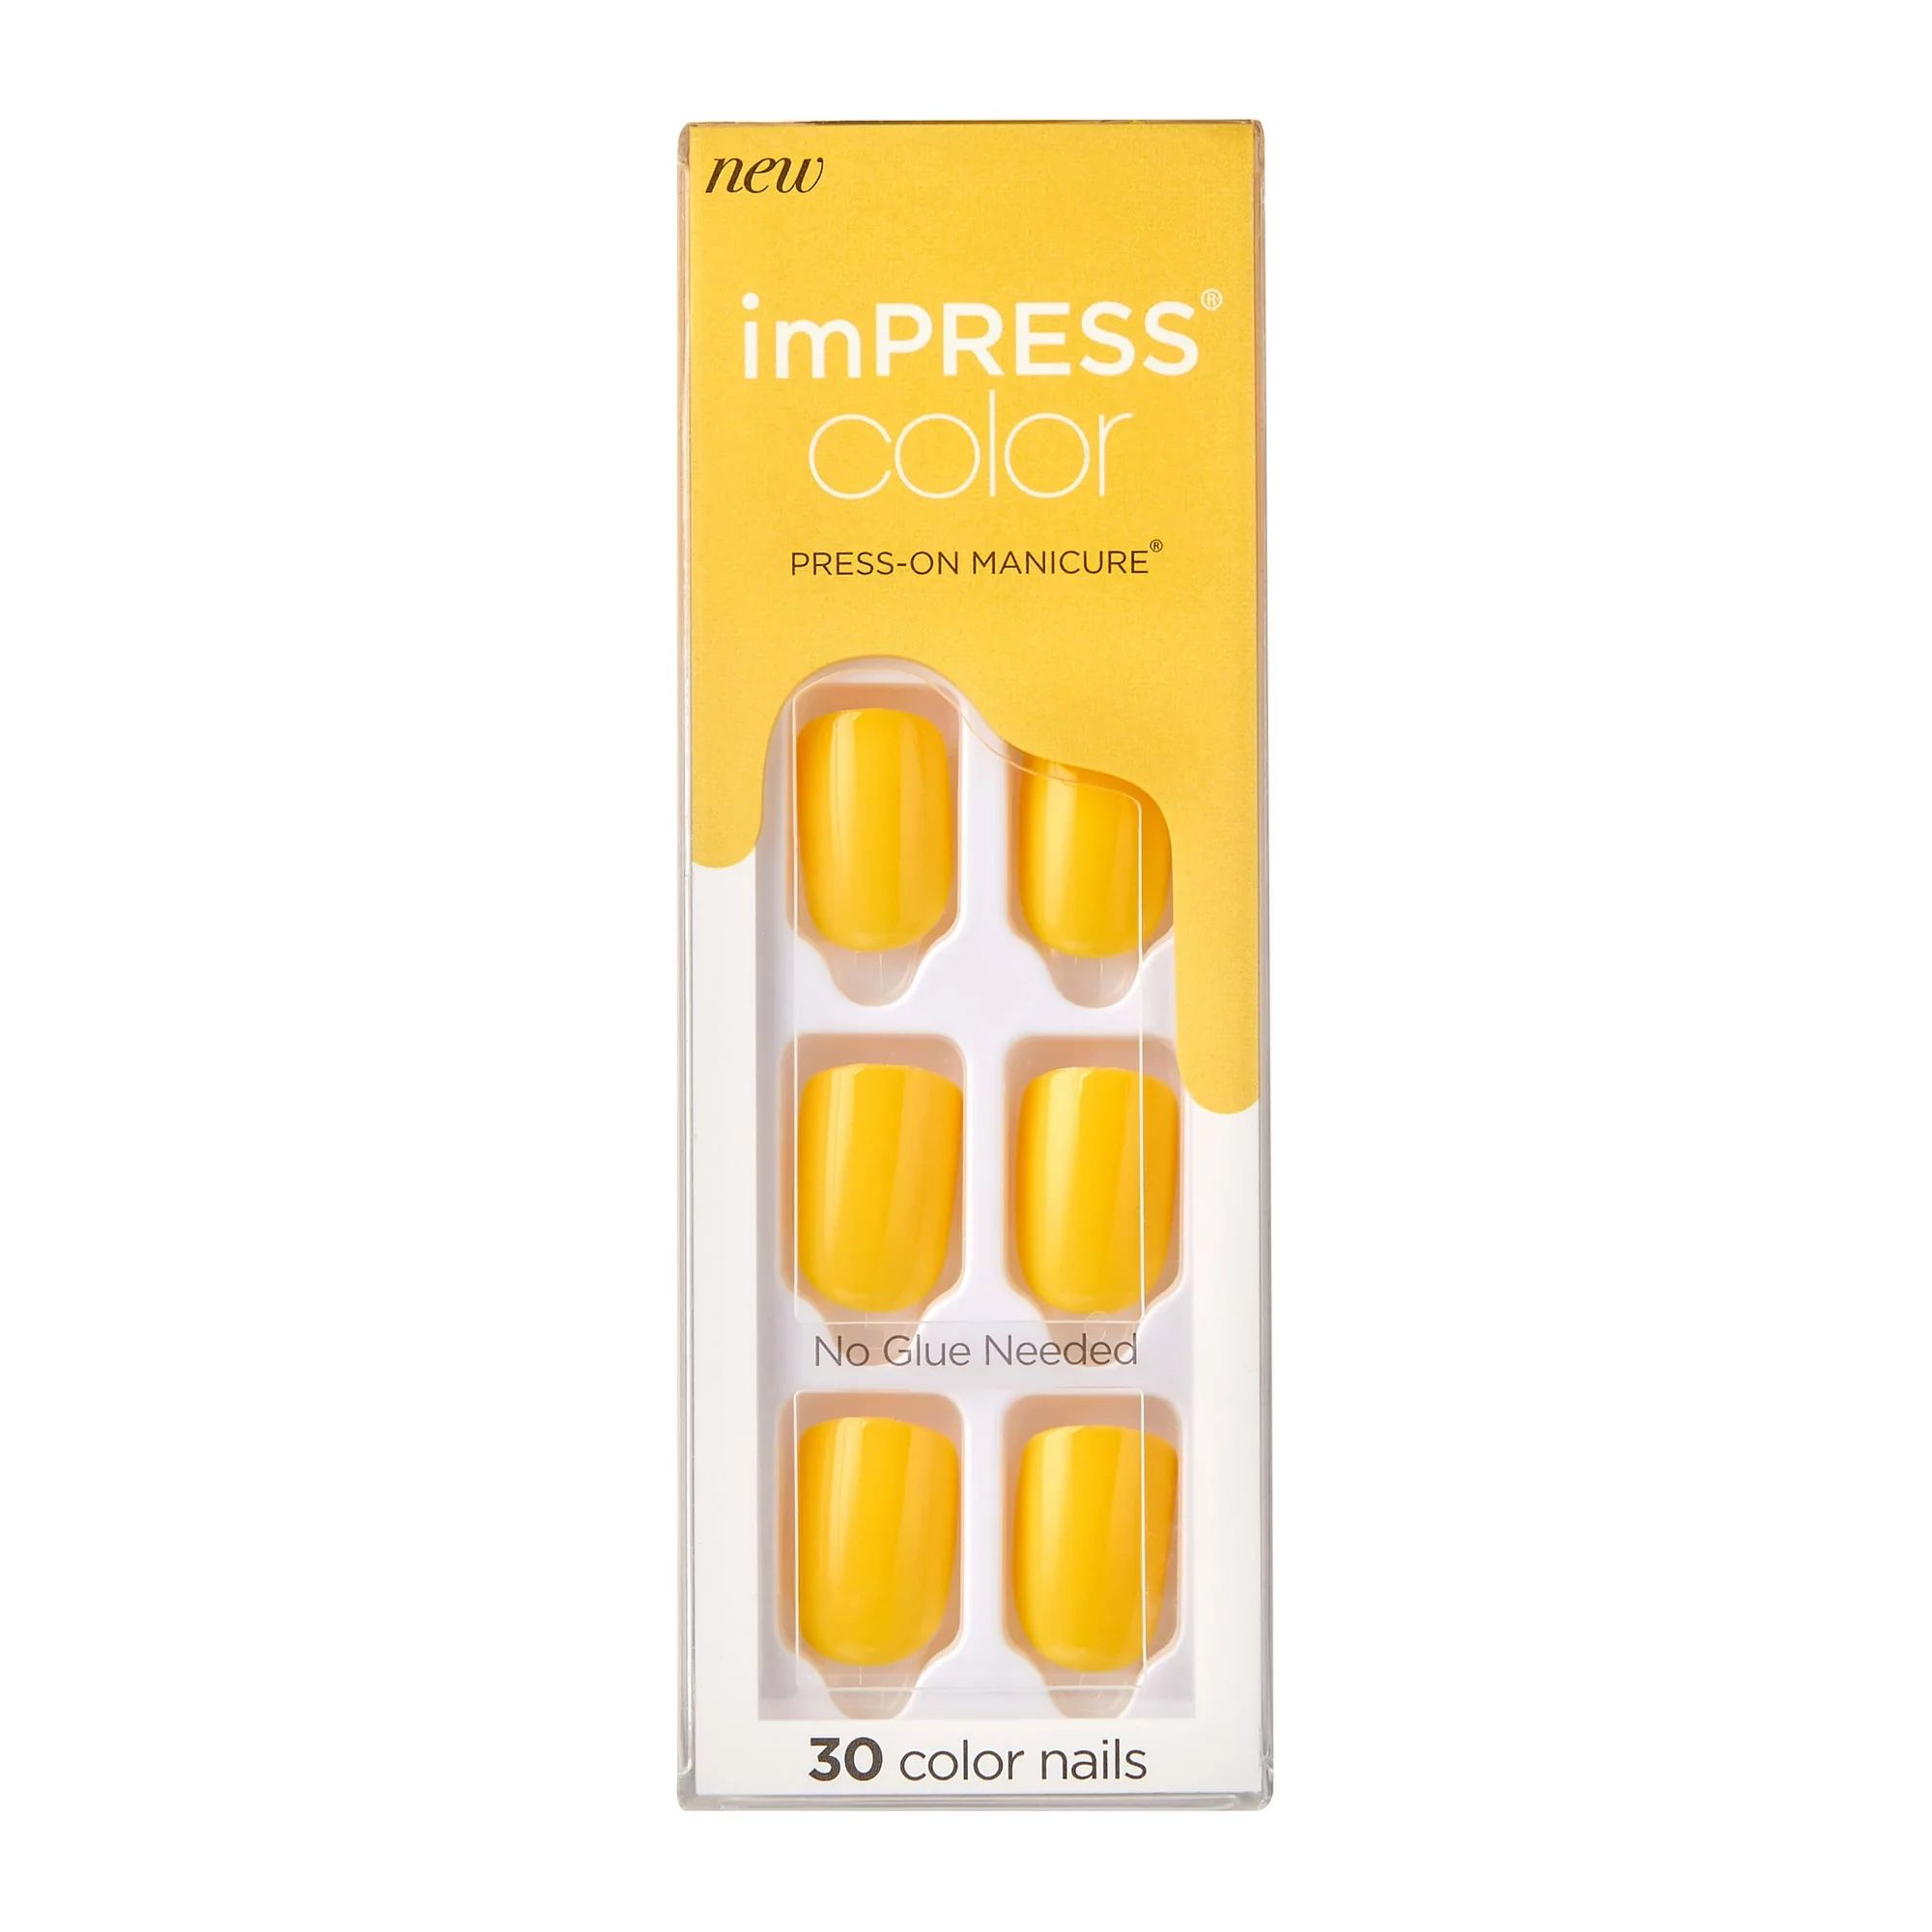 KISS imPRESS Color Press-on Manicure - YOLO, Short | Walmart (US)